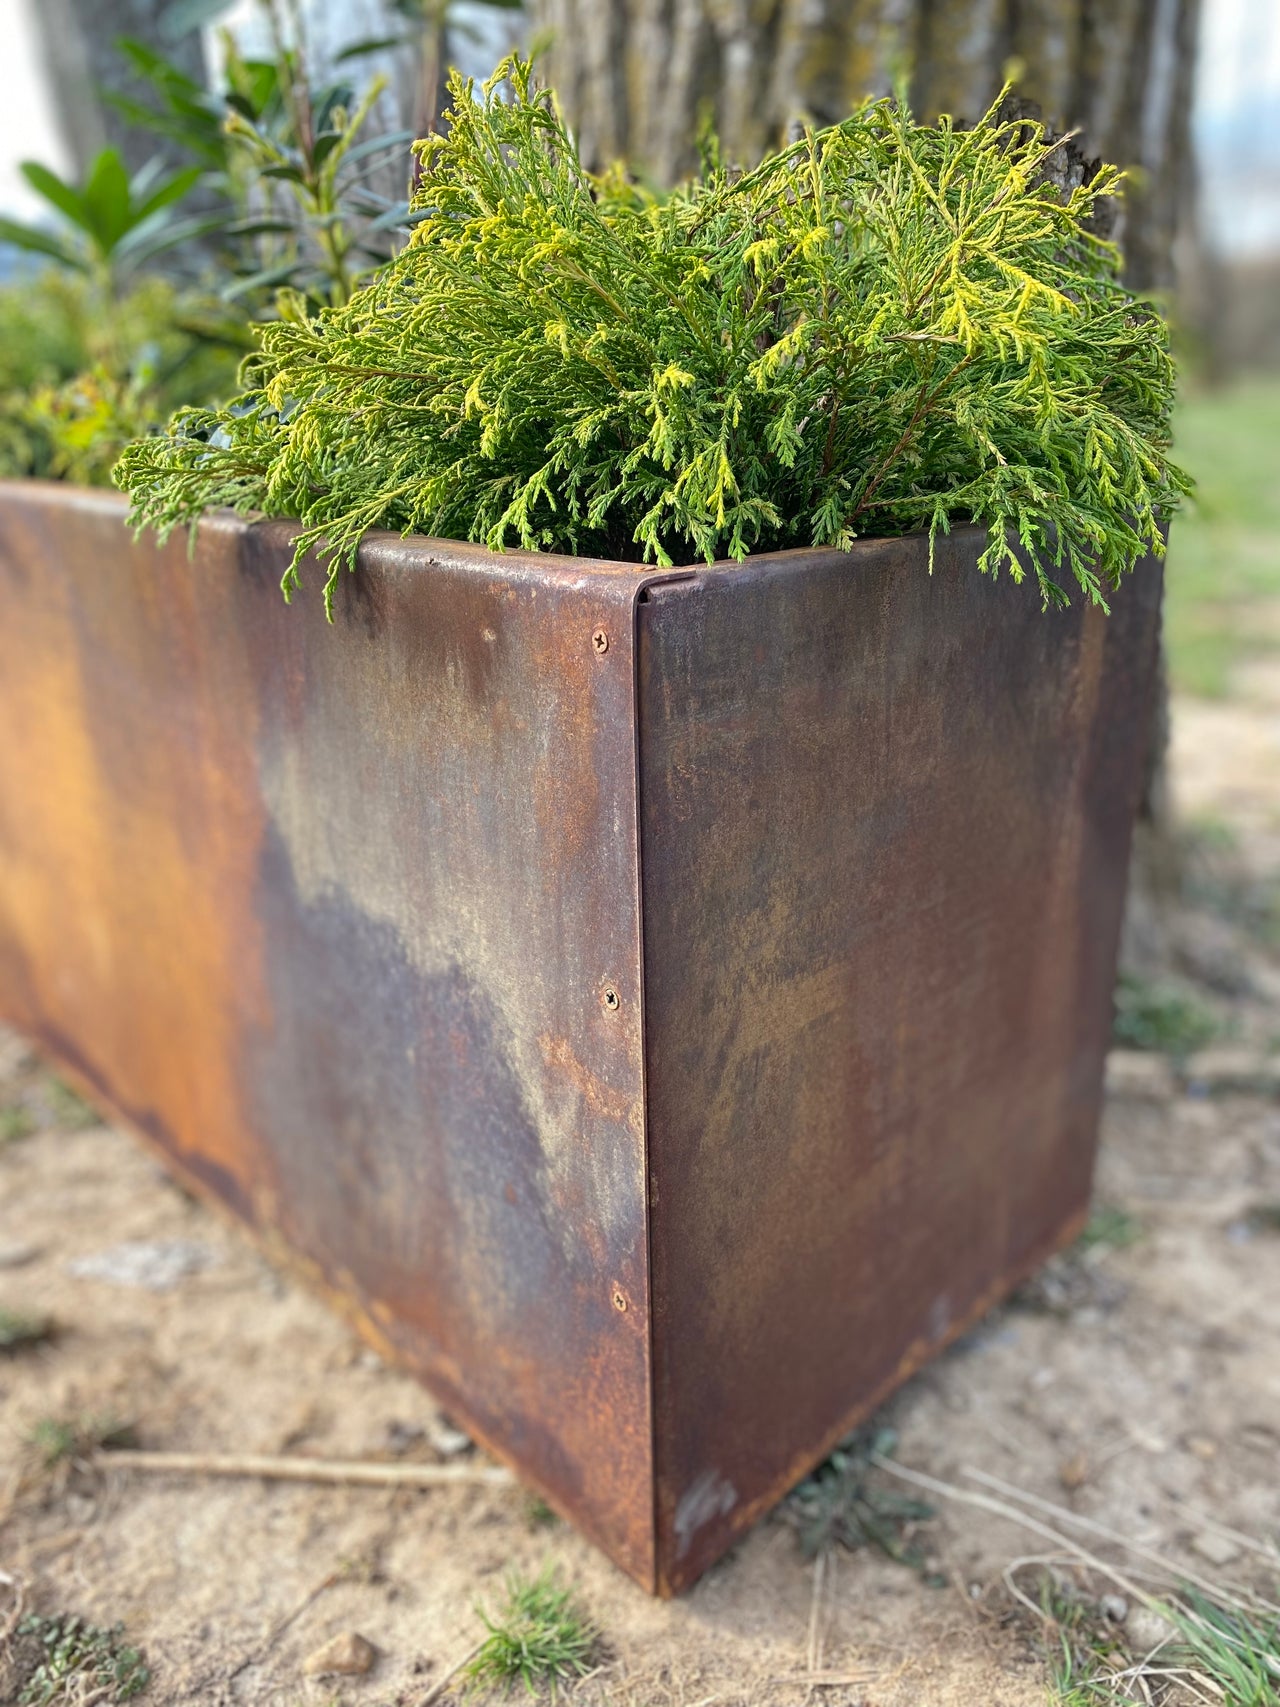 Metal Trough Planter - 30" x 12" x 14" Medium Rectangular Planter - Spring Annual Planter Pot - Raw Steel Will Develop Natural Rusty Patina